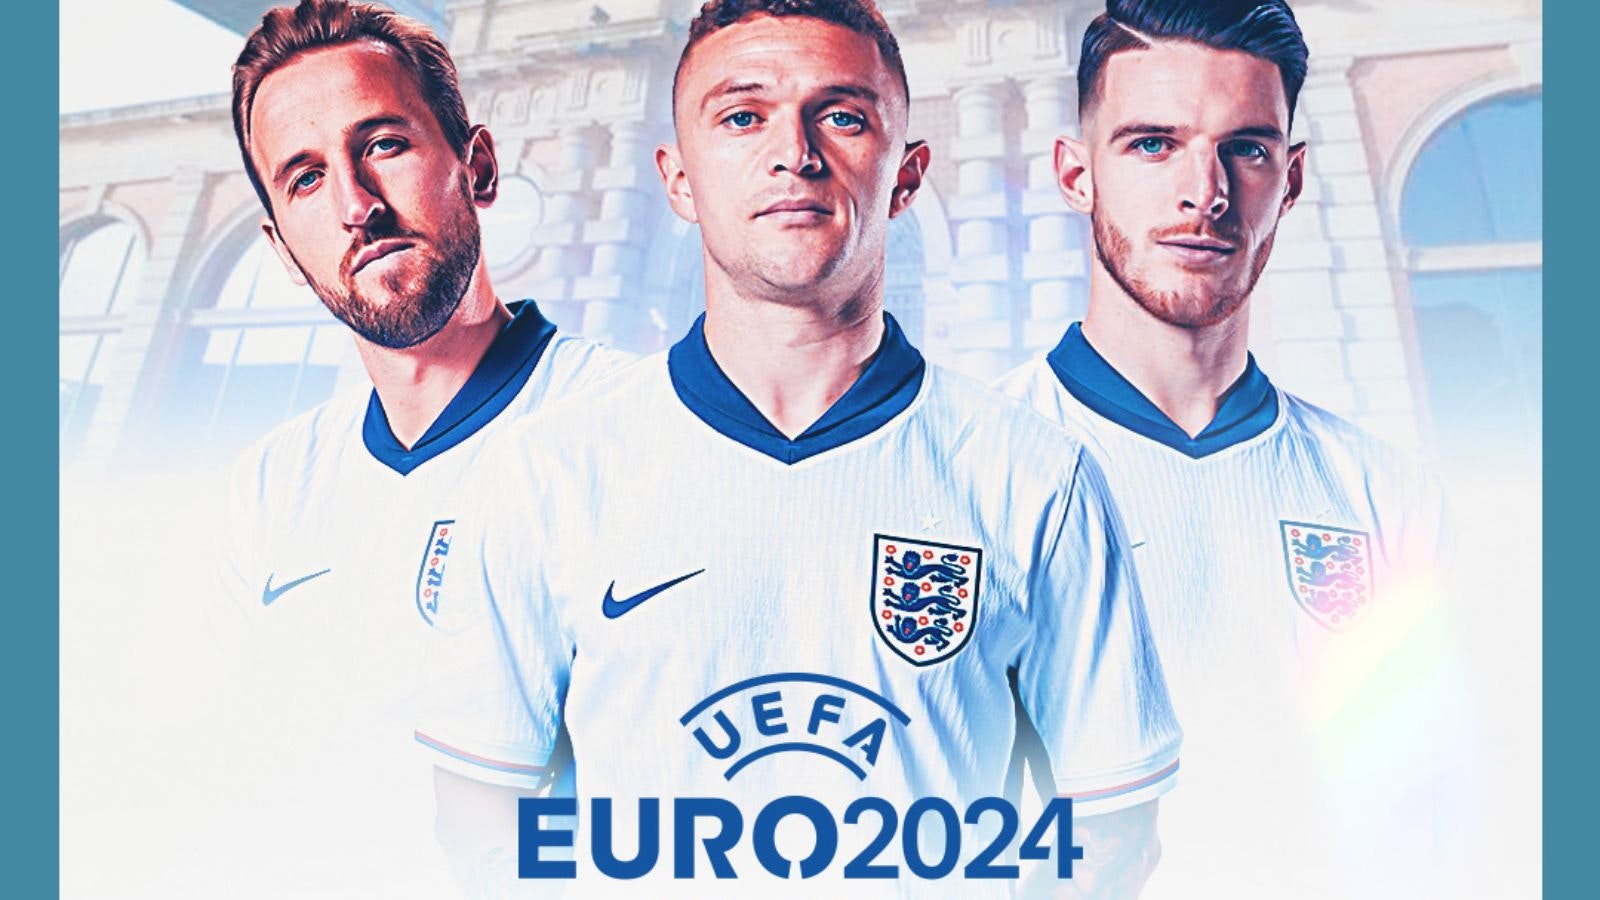 Euros 2024 Fan Zone – Serbia v England @ Riverside